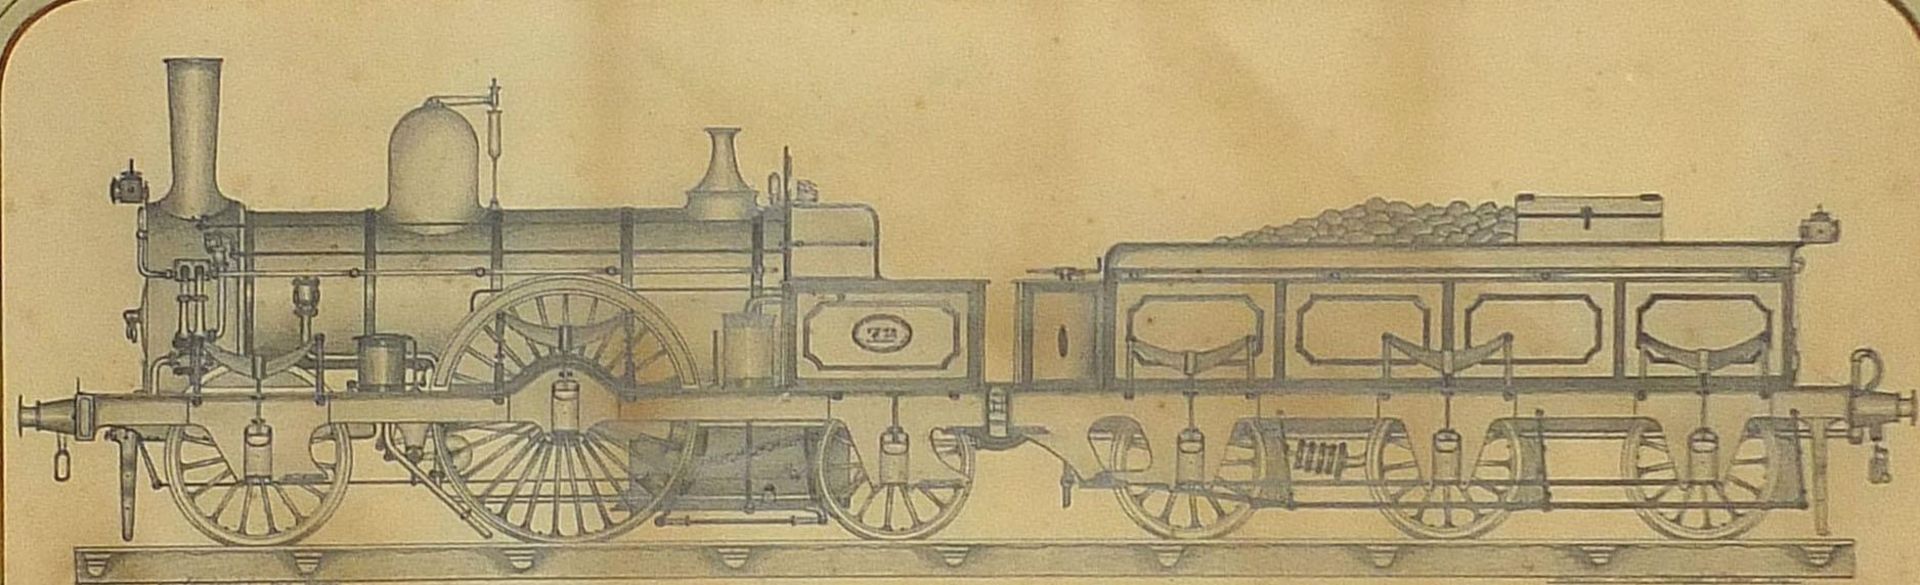 South Eastern Railway, Mail Express engine, Ashford Works, 1865, 19th century pencil drawing,